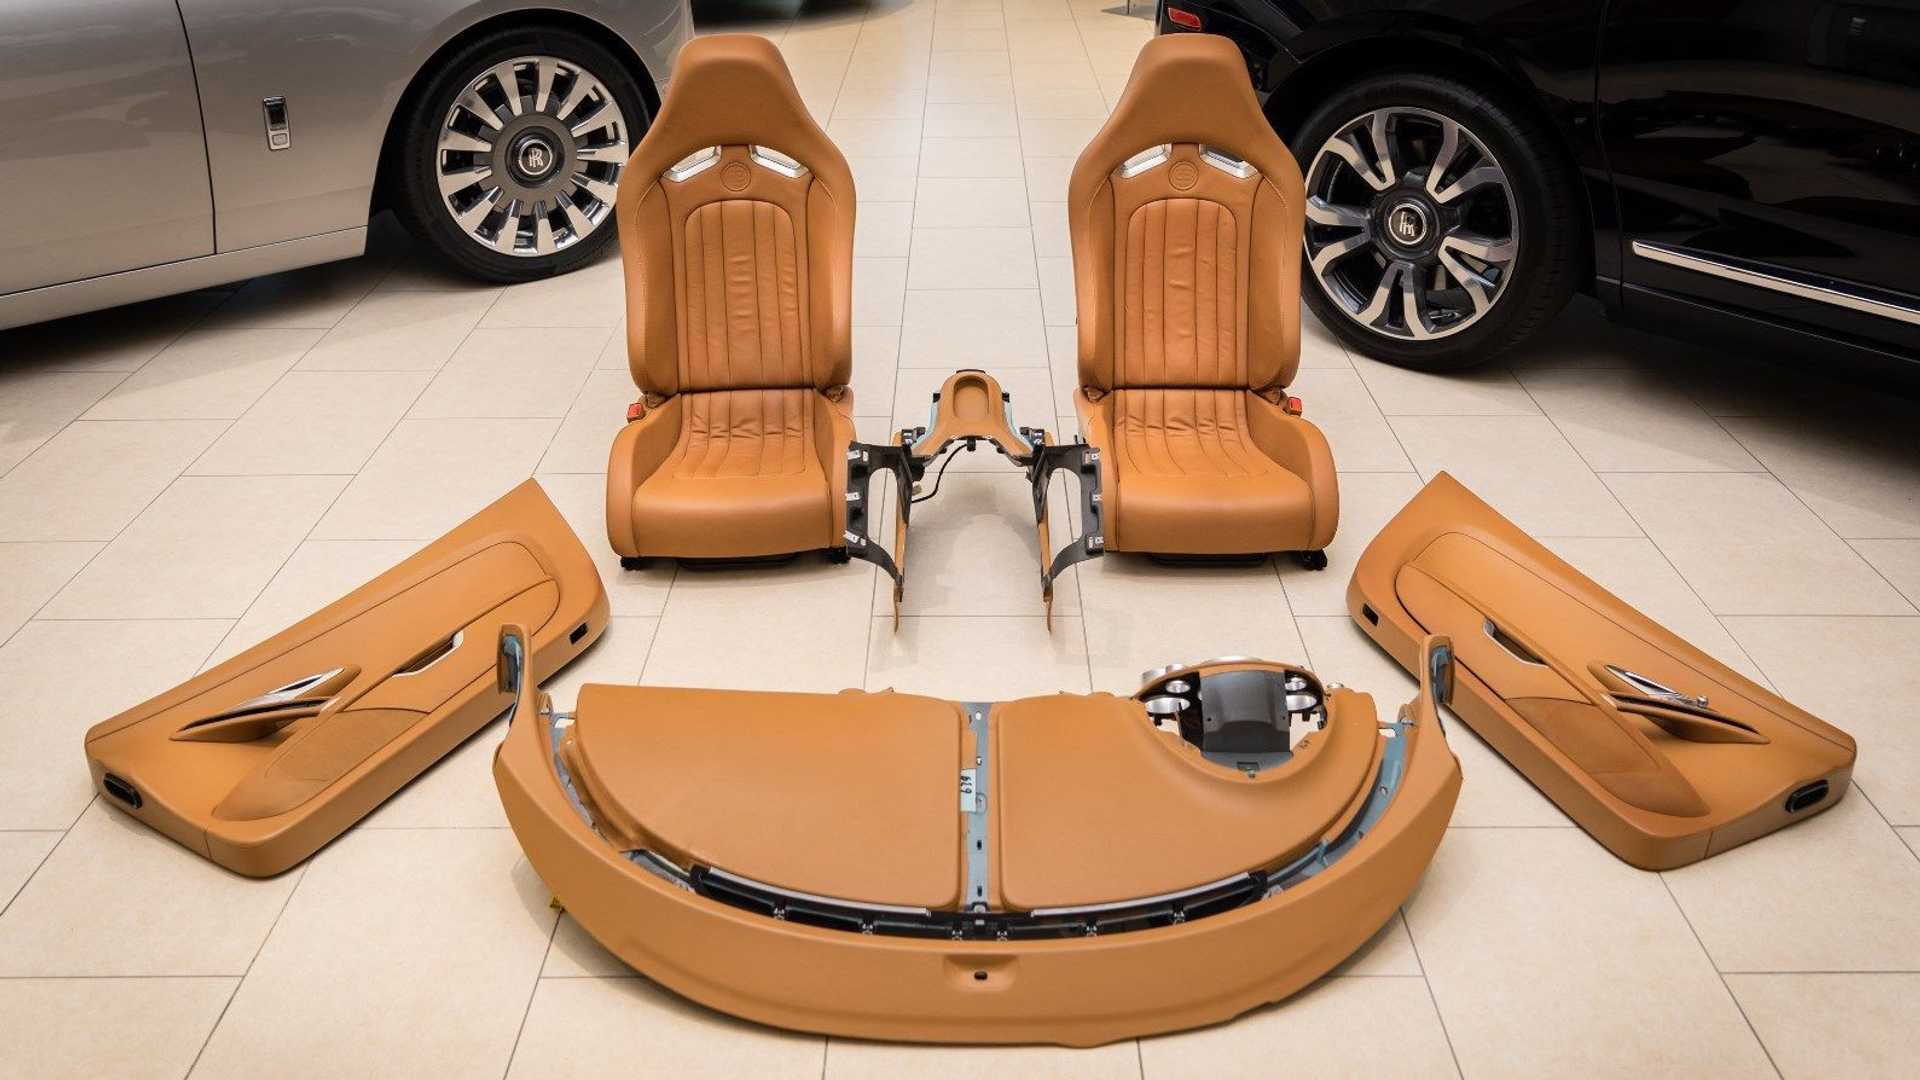 $150,000 buys a Bugatti Veyron's complete interior